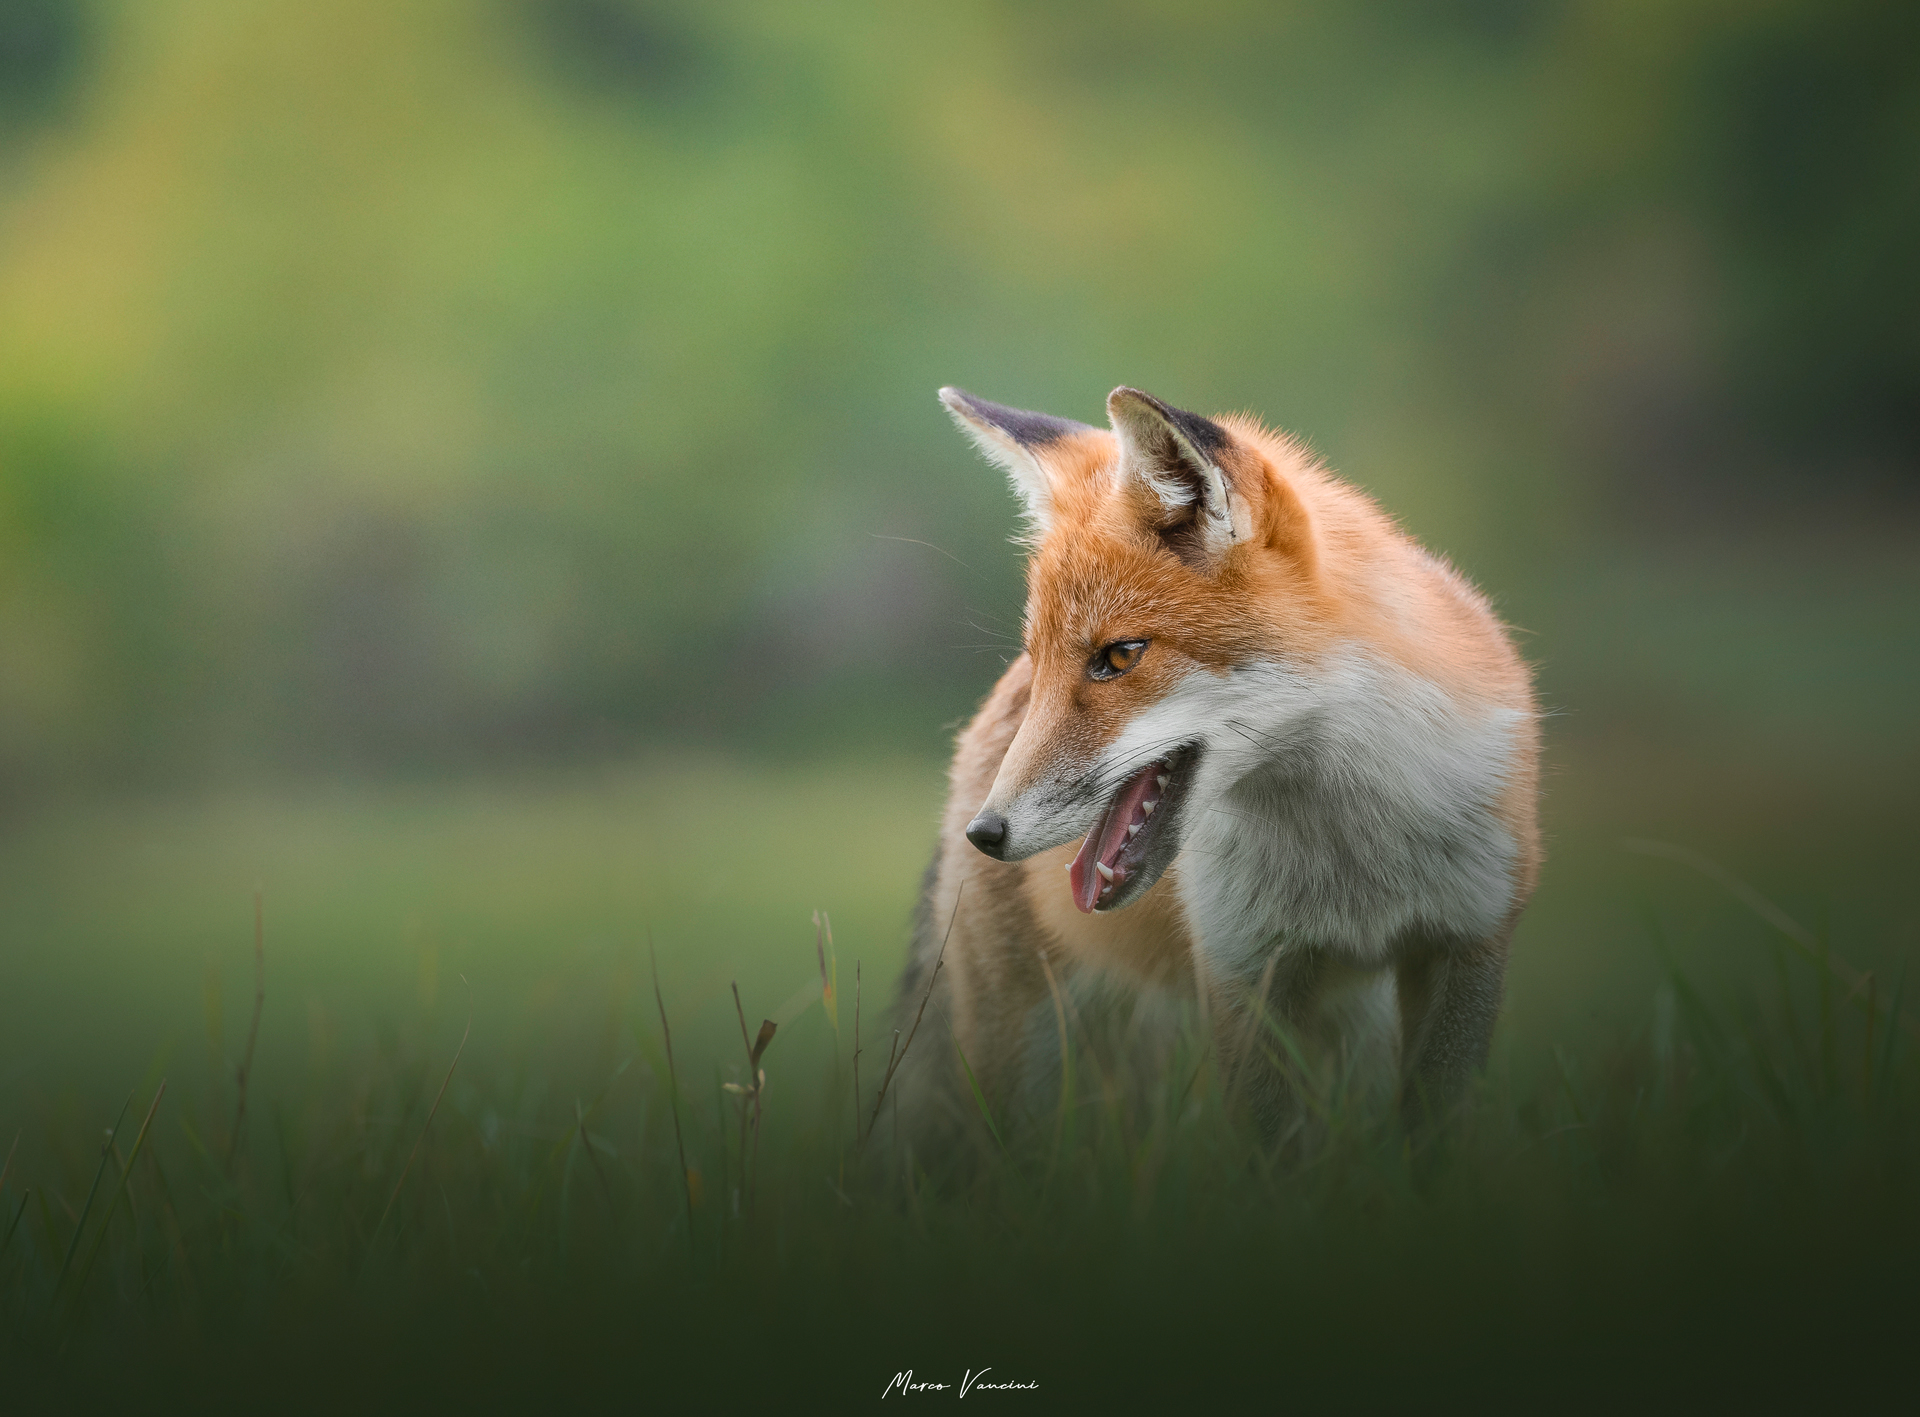 The fox's gaze ...